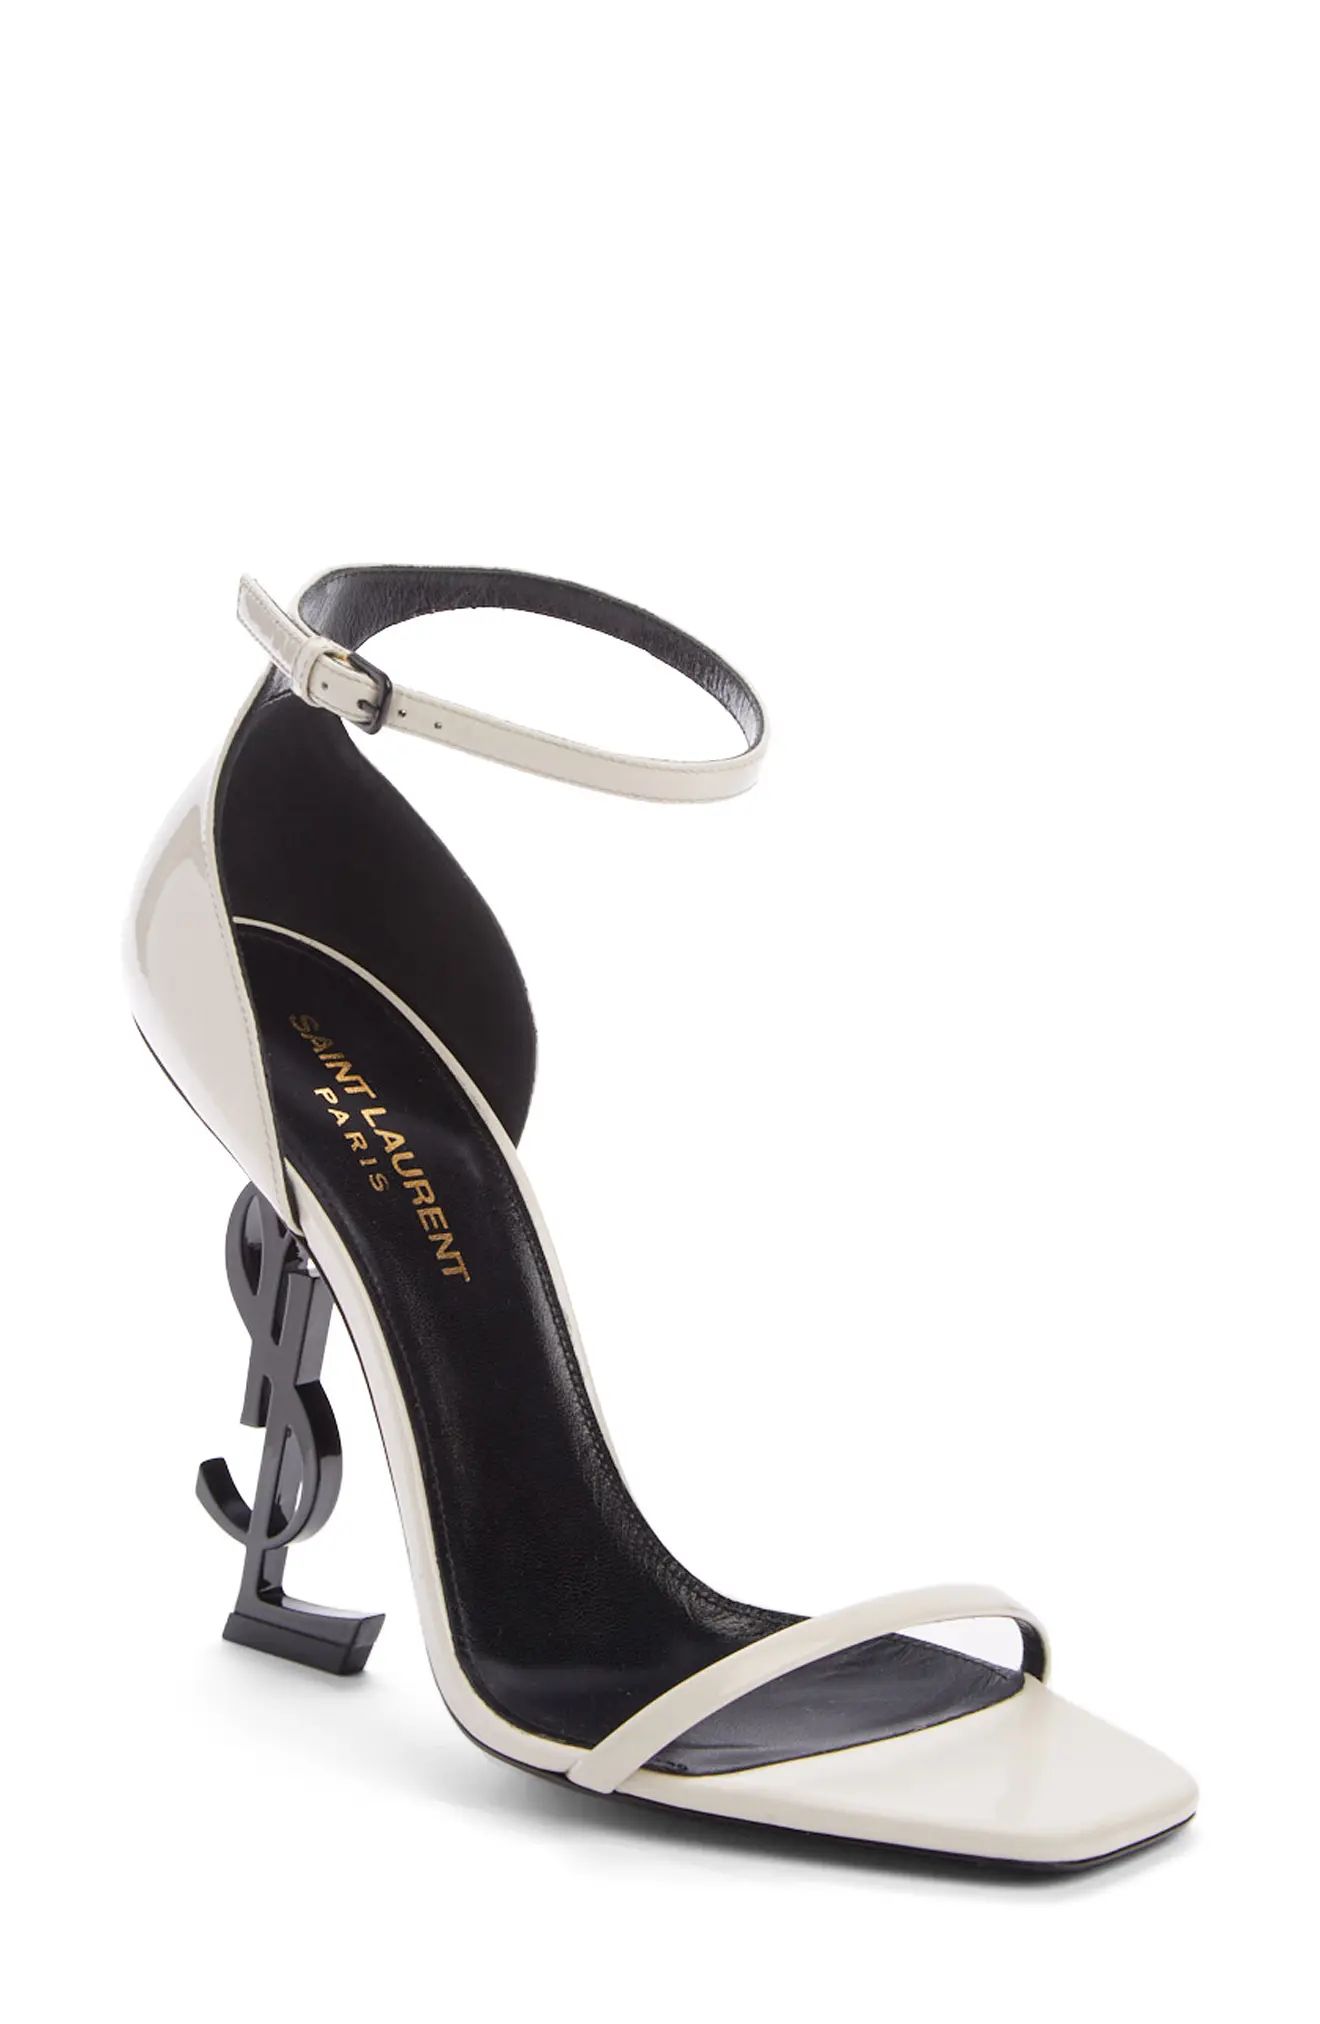 Women's Saint Laurent Opyum Ysl Ankle Strap Sandal, Size 5.5US - White | Nordstrom